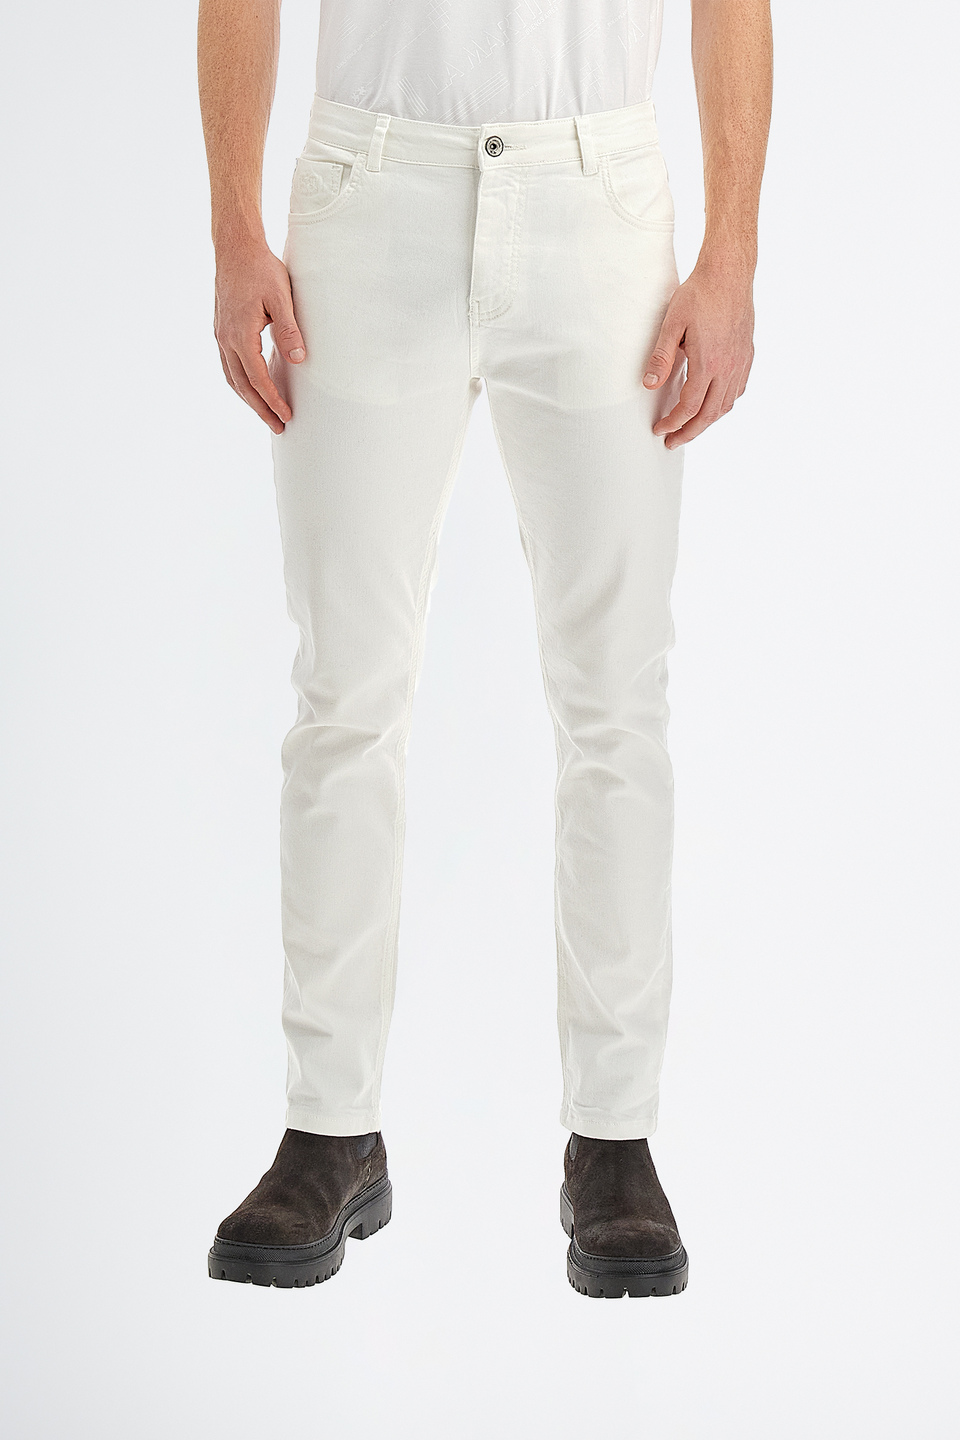 Pantalón de hombre en algodón elástico regular fit modelo chino | La Martina - Official Online Shop